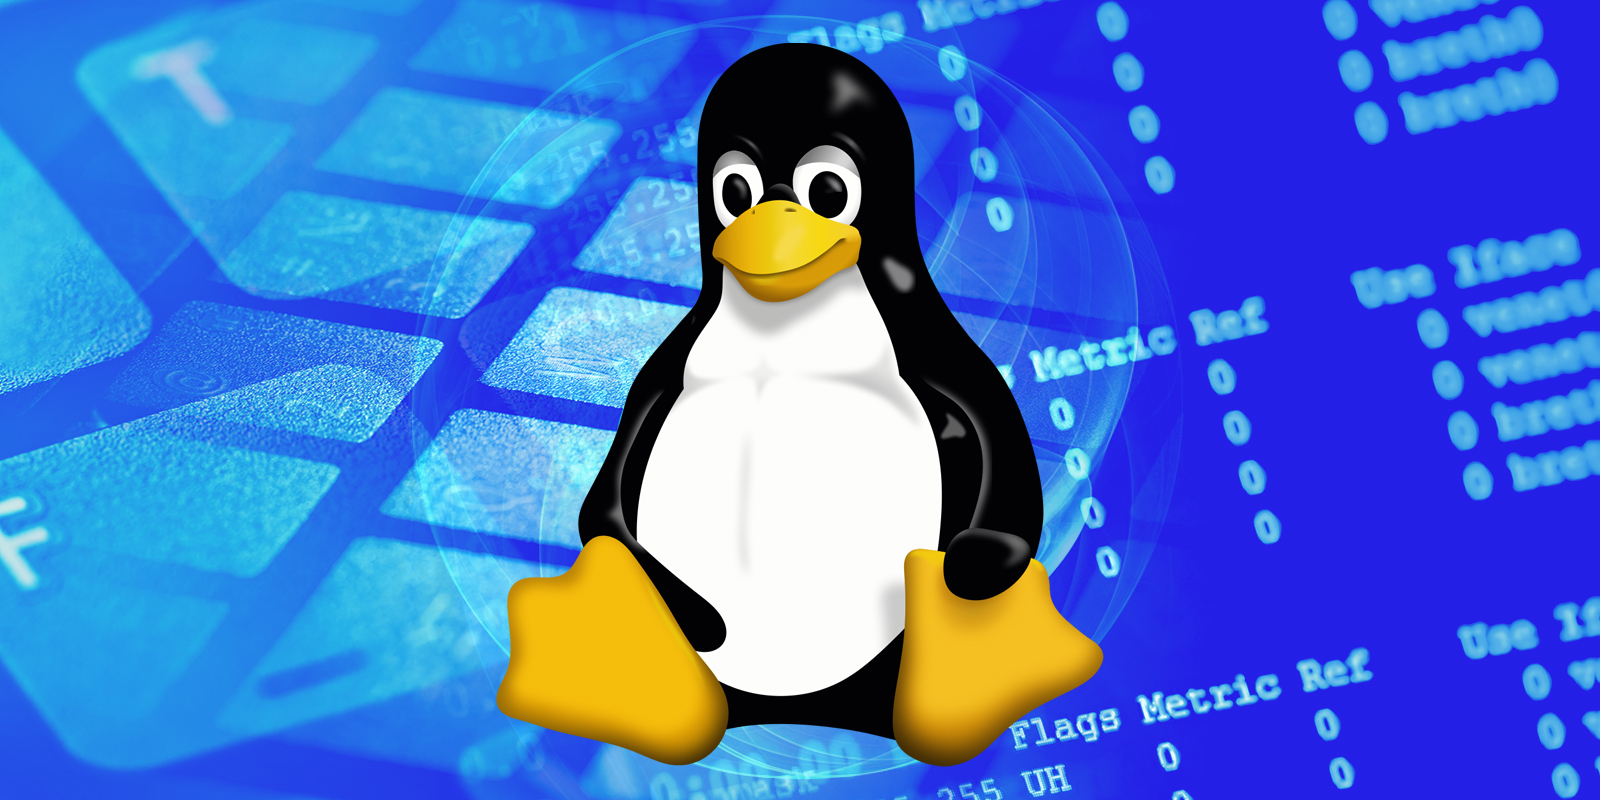 Vk linux. Курсы линукс. Курсы Linux. Linux mobile.